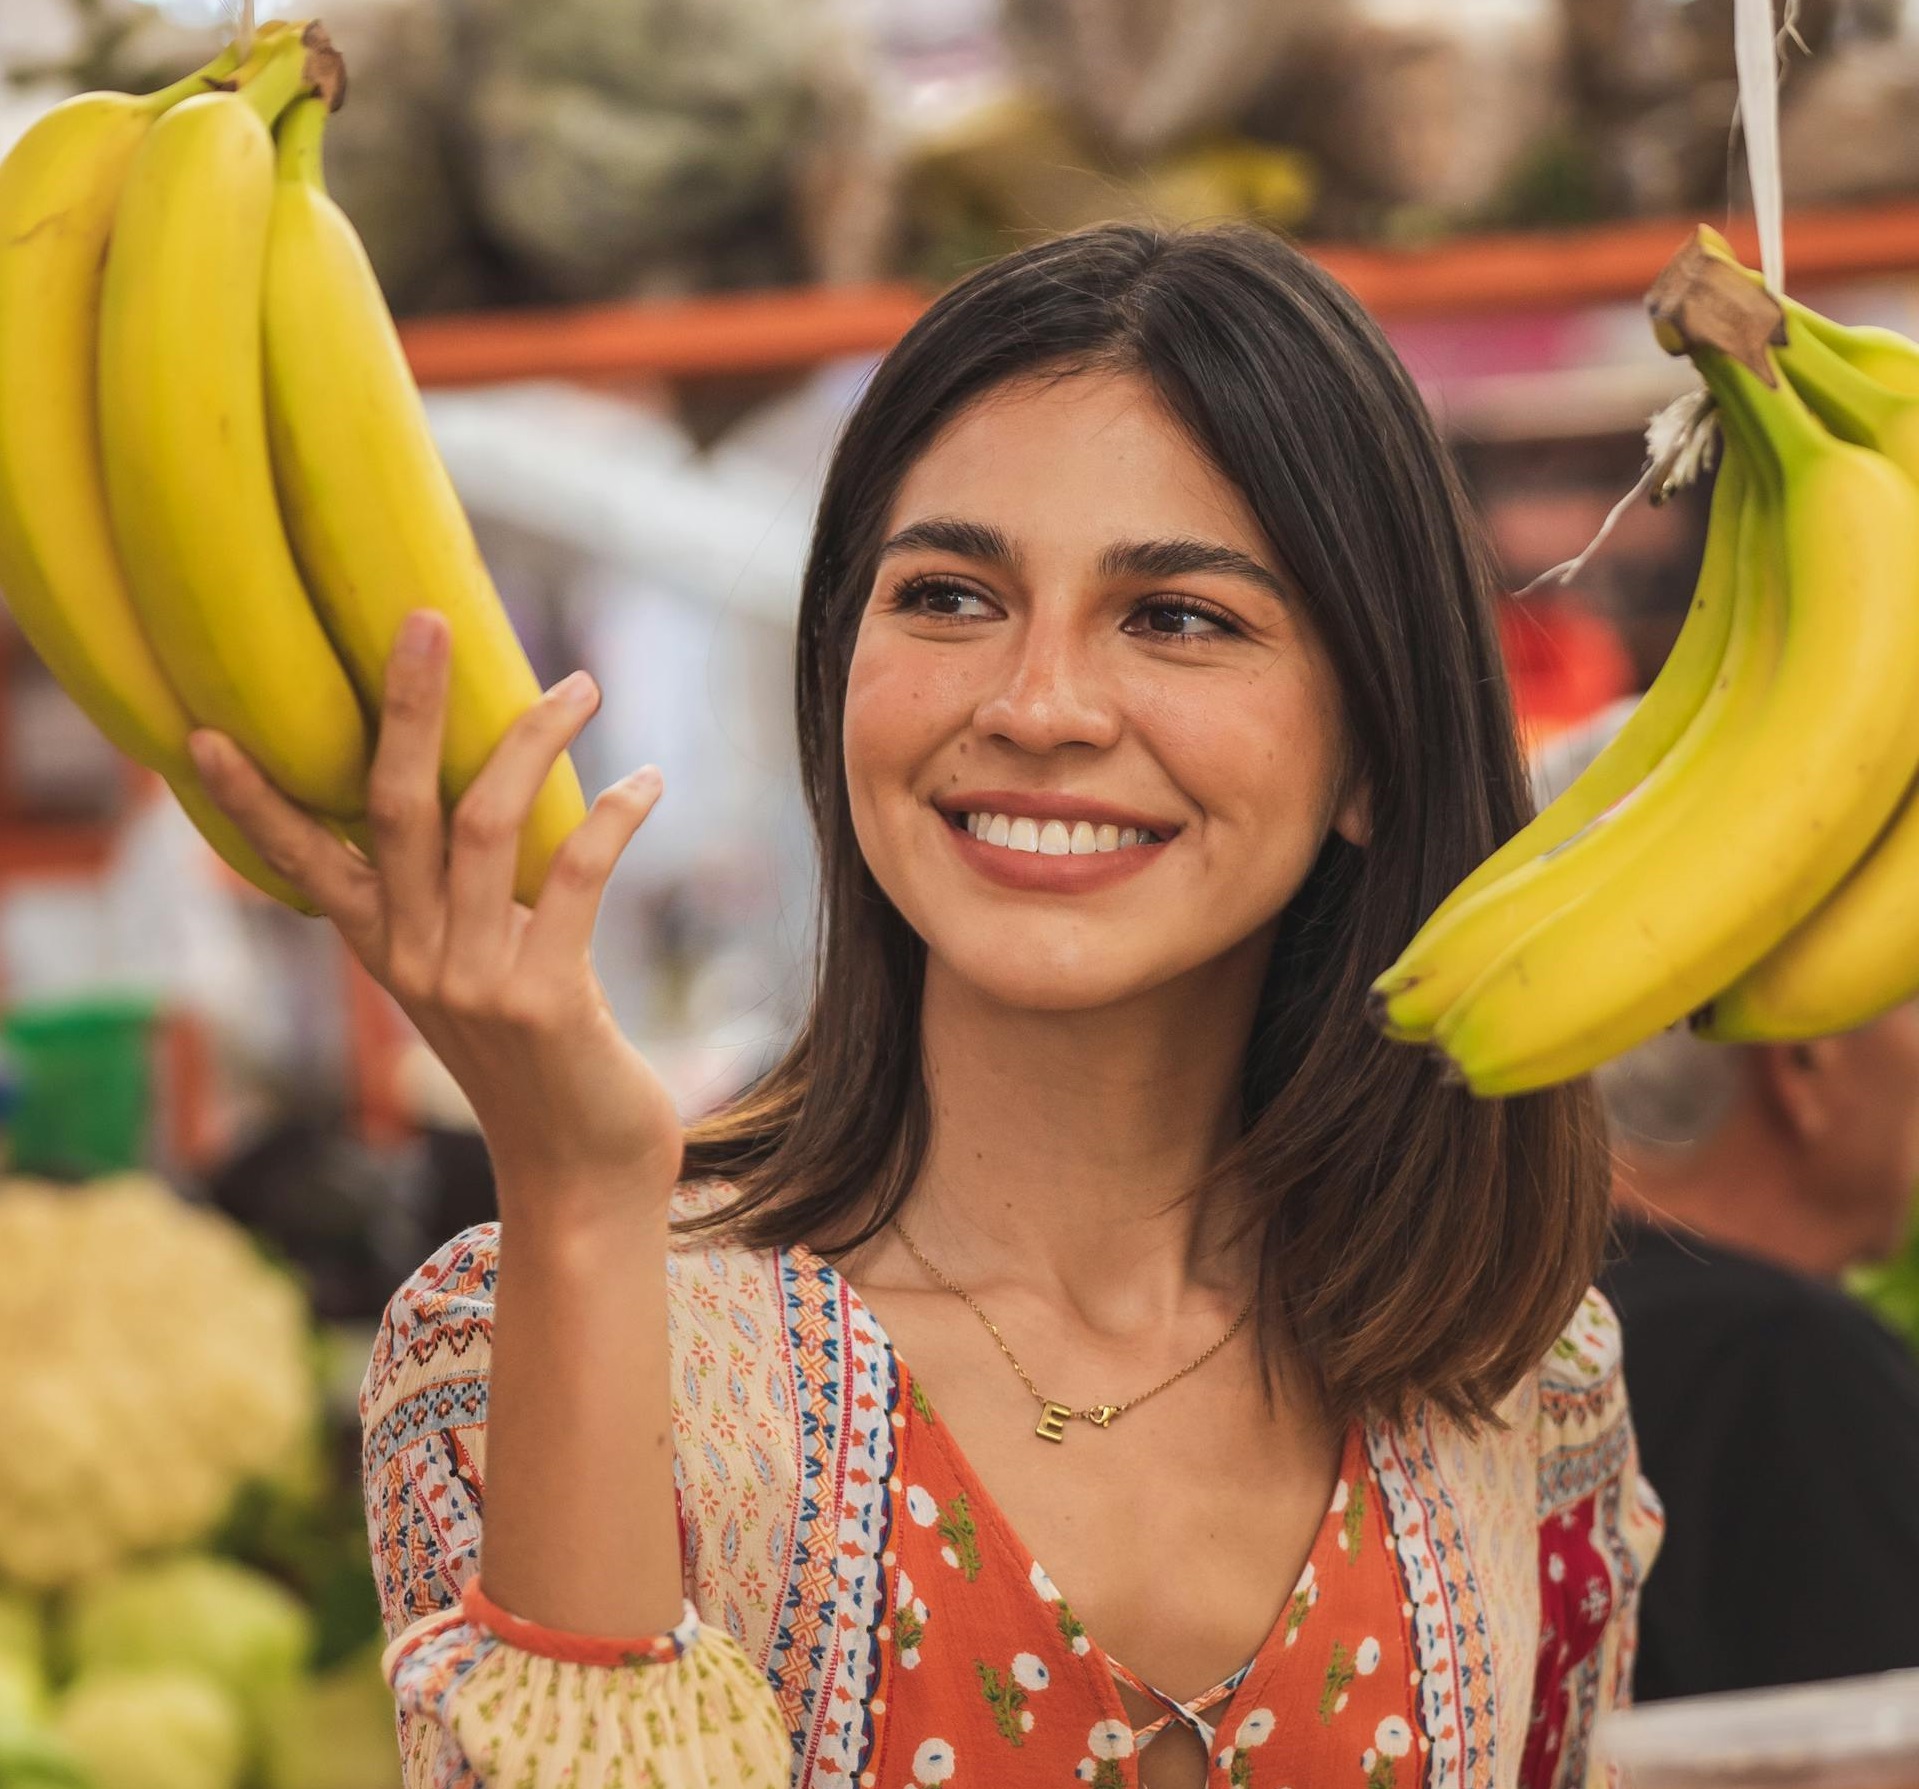 Mujer sosteniendo plátanos